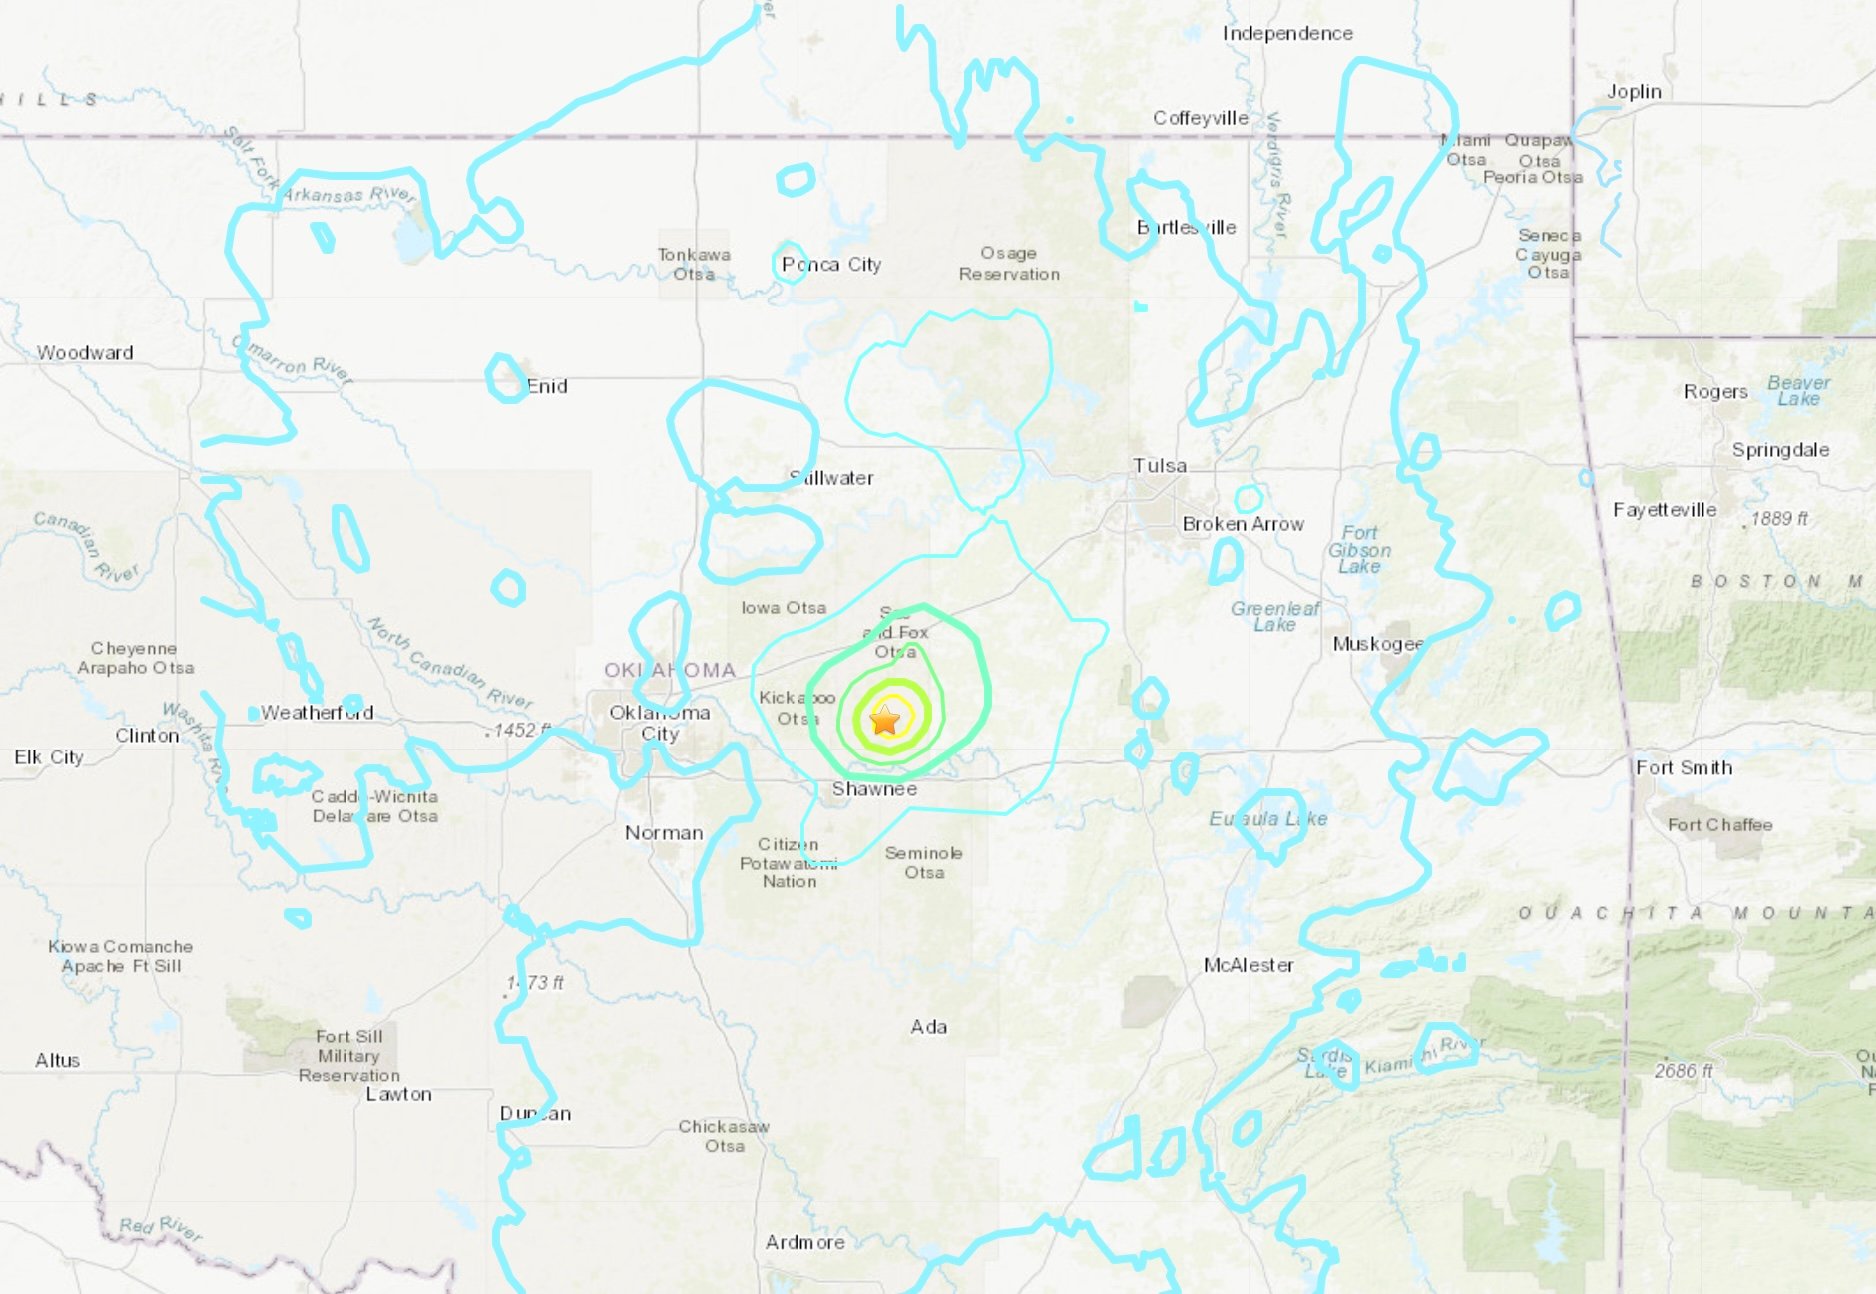 Magnitude 5.1 earthquake near Oklahoma City felt in Fayetteville